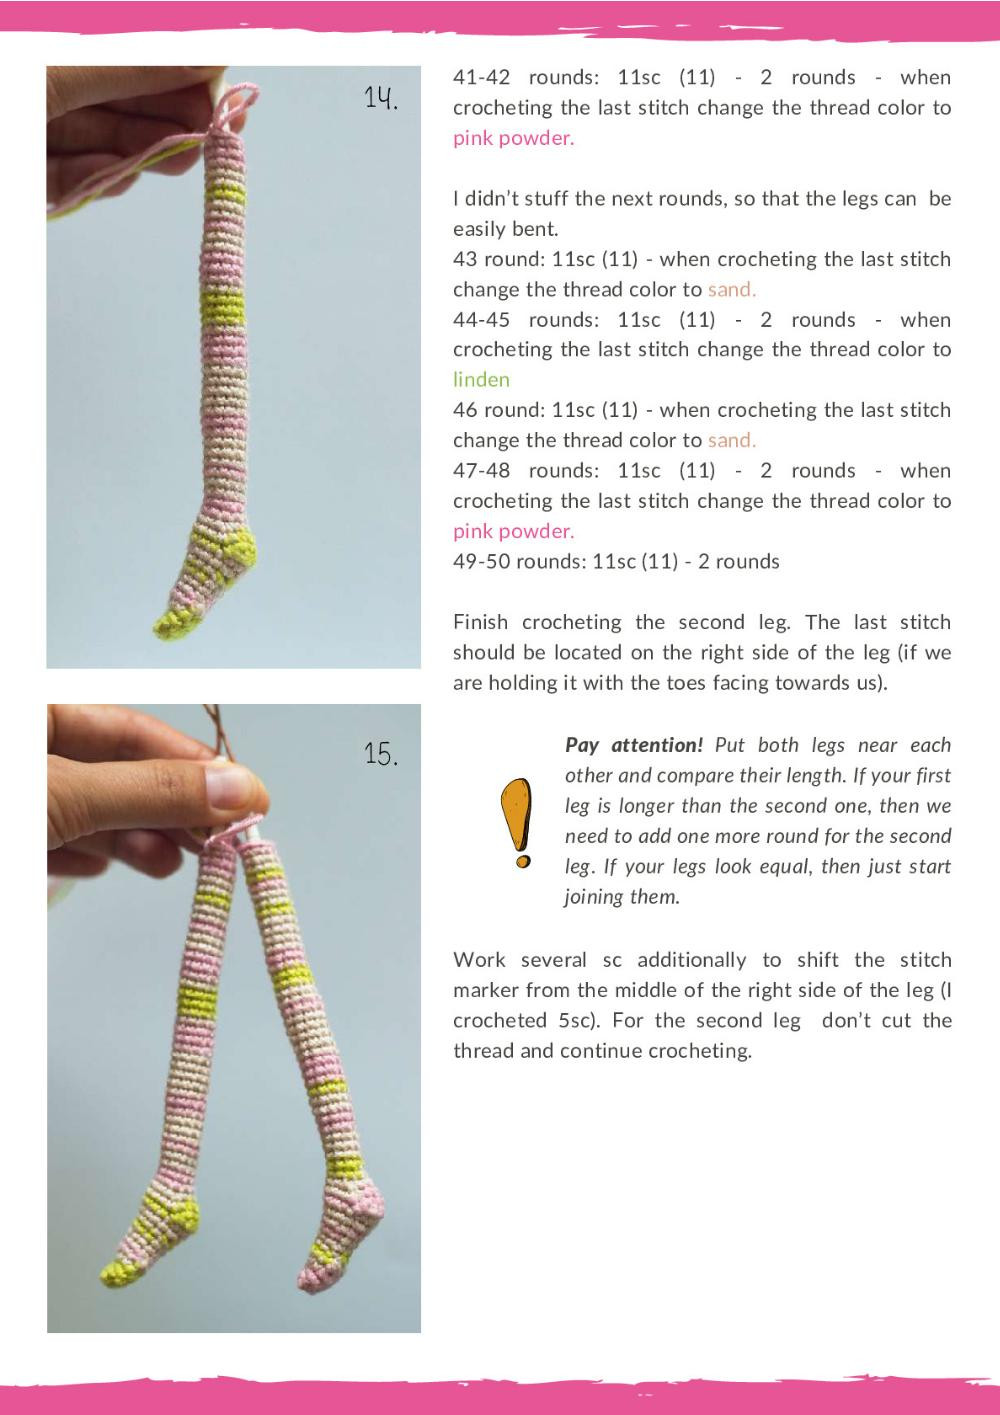 ROSY, THE FLOWER FAIRY Crochet toy pattern